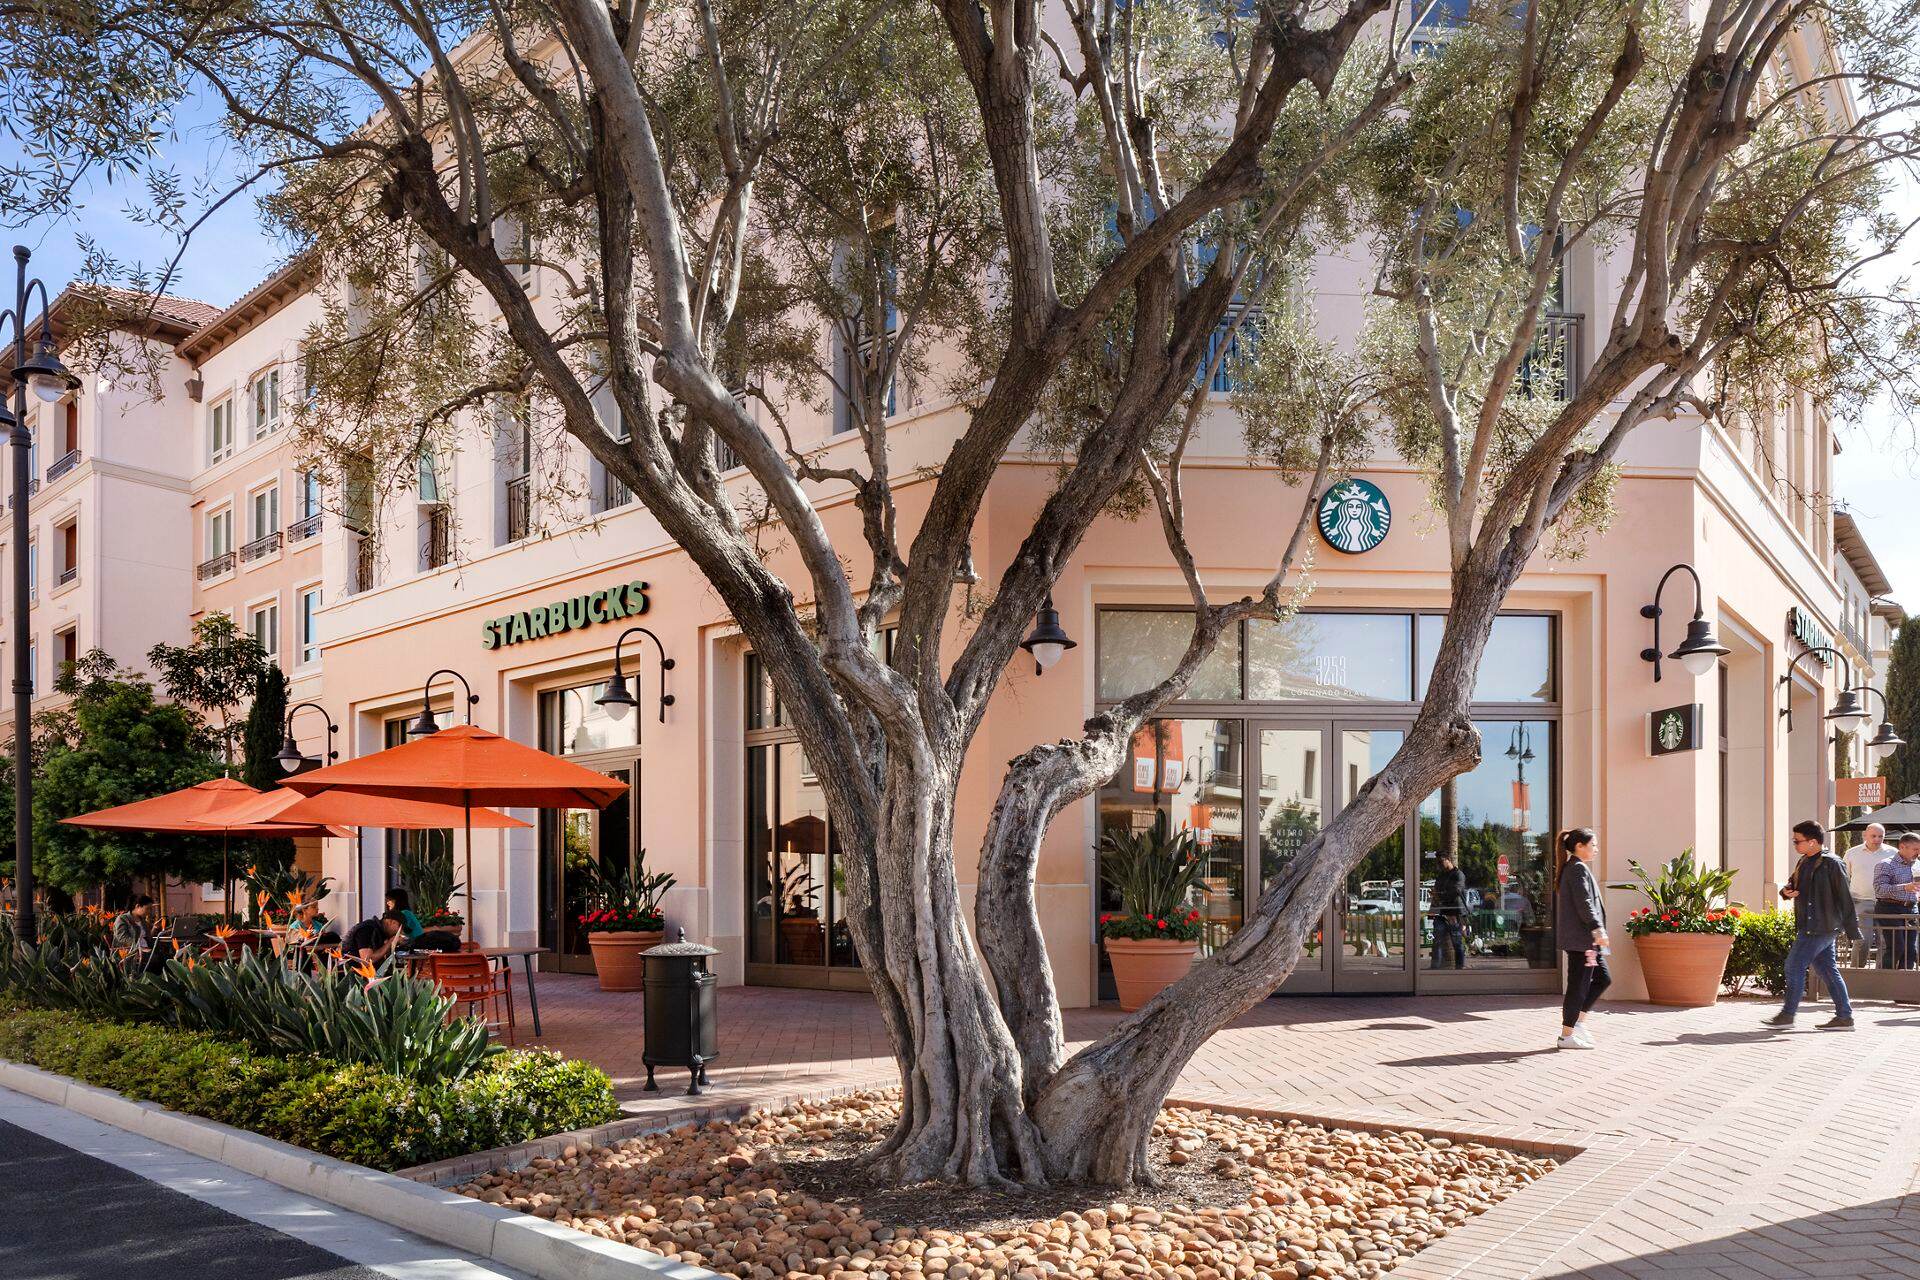 Exterior view of Starbucks at Santa Clara Square Marketplace in Santa Clara, CA.